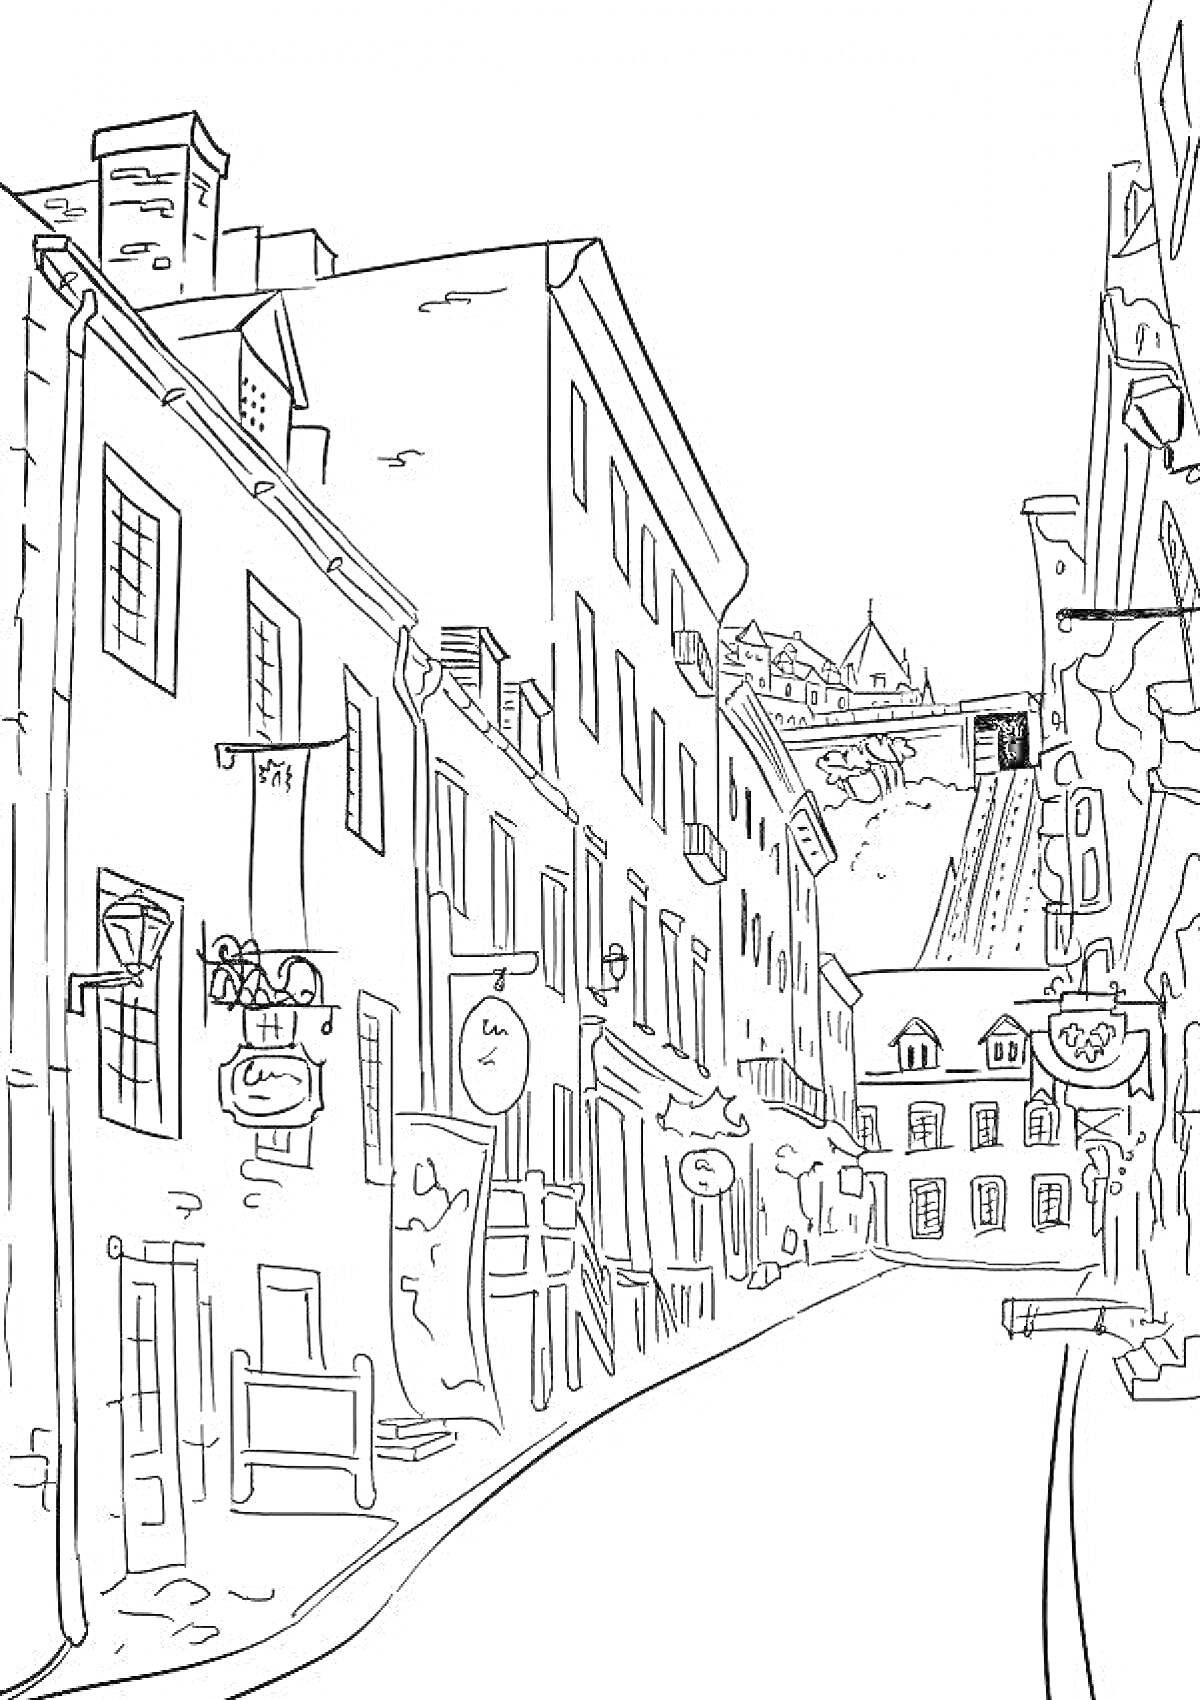 Раскраска Улица с магазинами, вывесками, окнами, лестницей и домами на холме